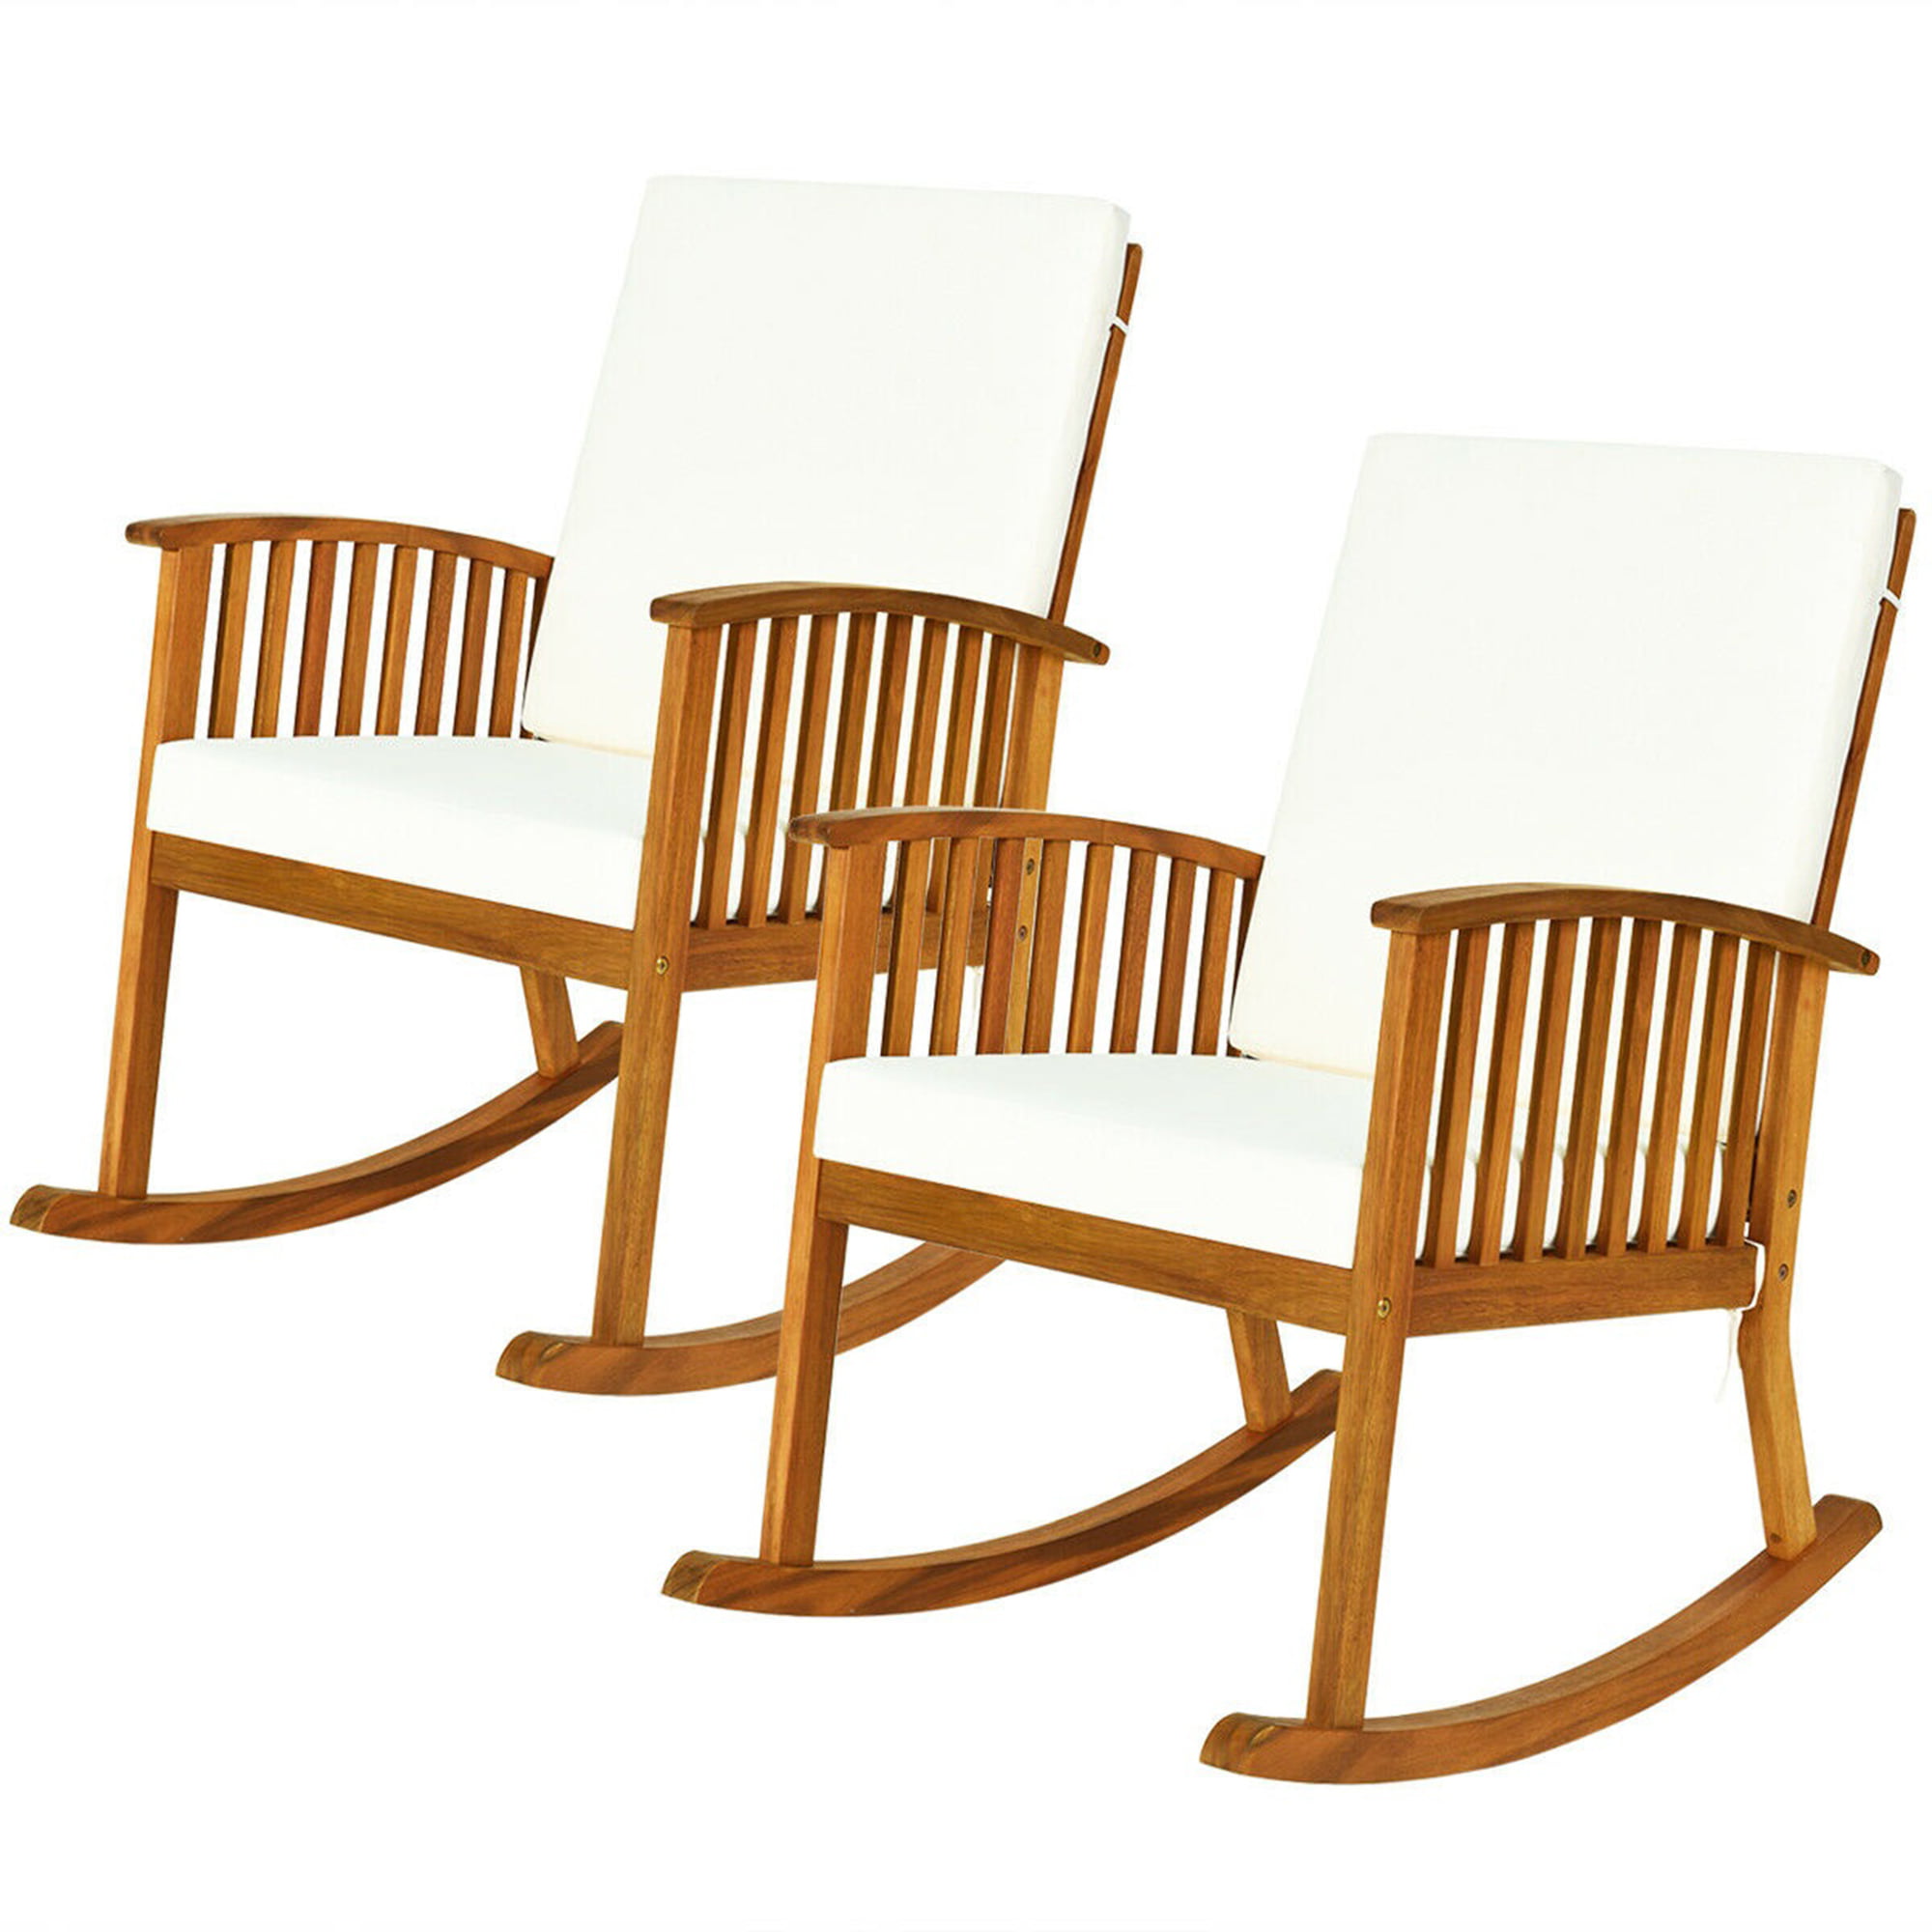 Gymax 2PCS Patio Wooden Rocking Chair Lawn Garden Outdoor w/ Armrest Cushion